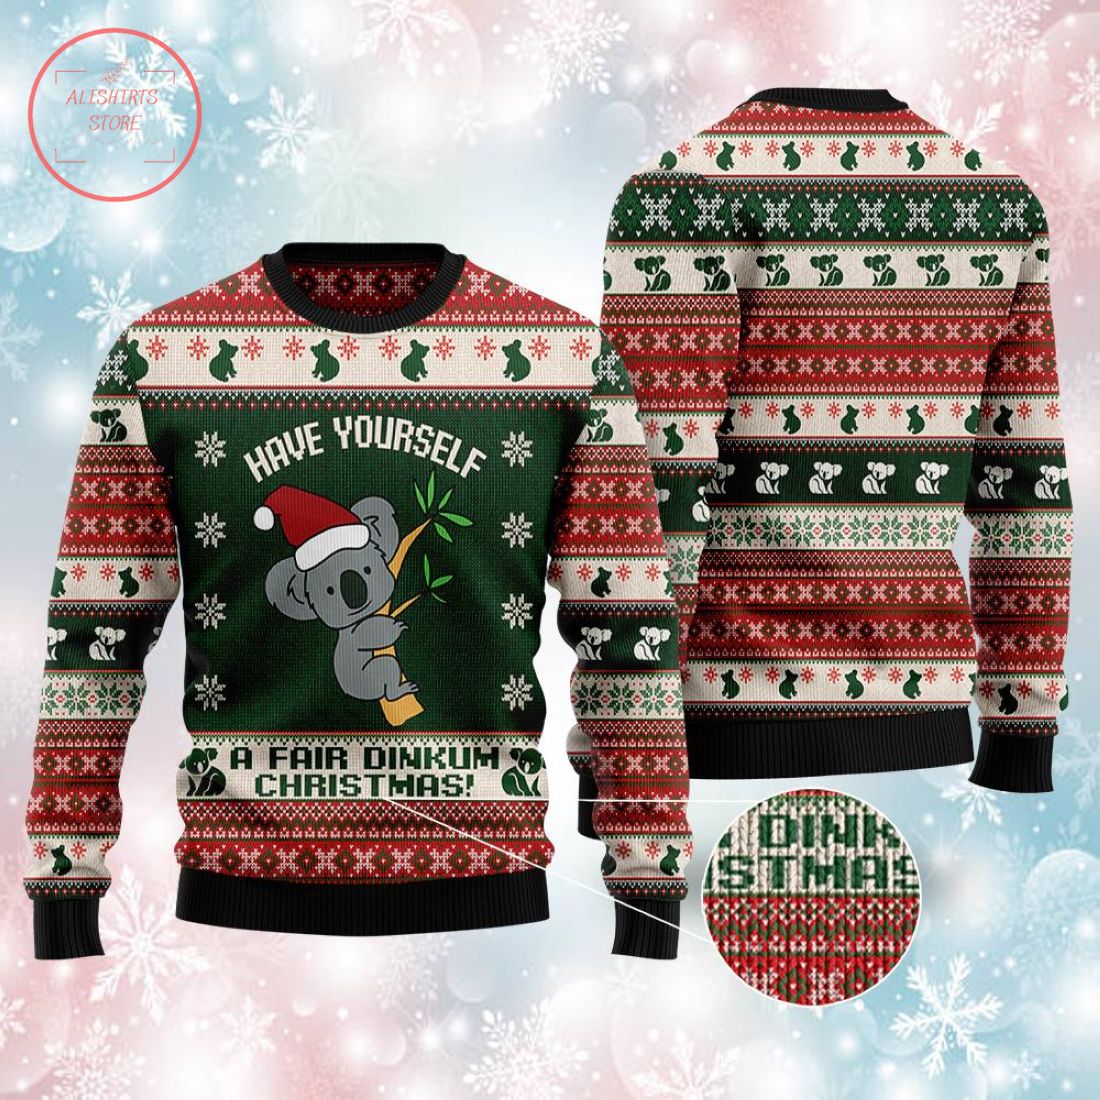 Australian Fair Dinkum Christmas Sweater